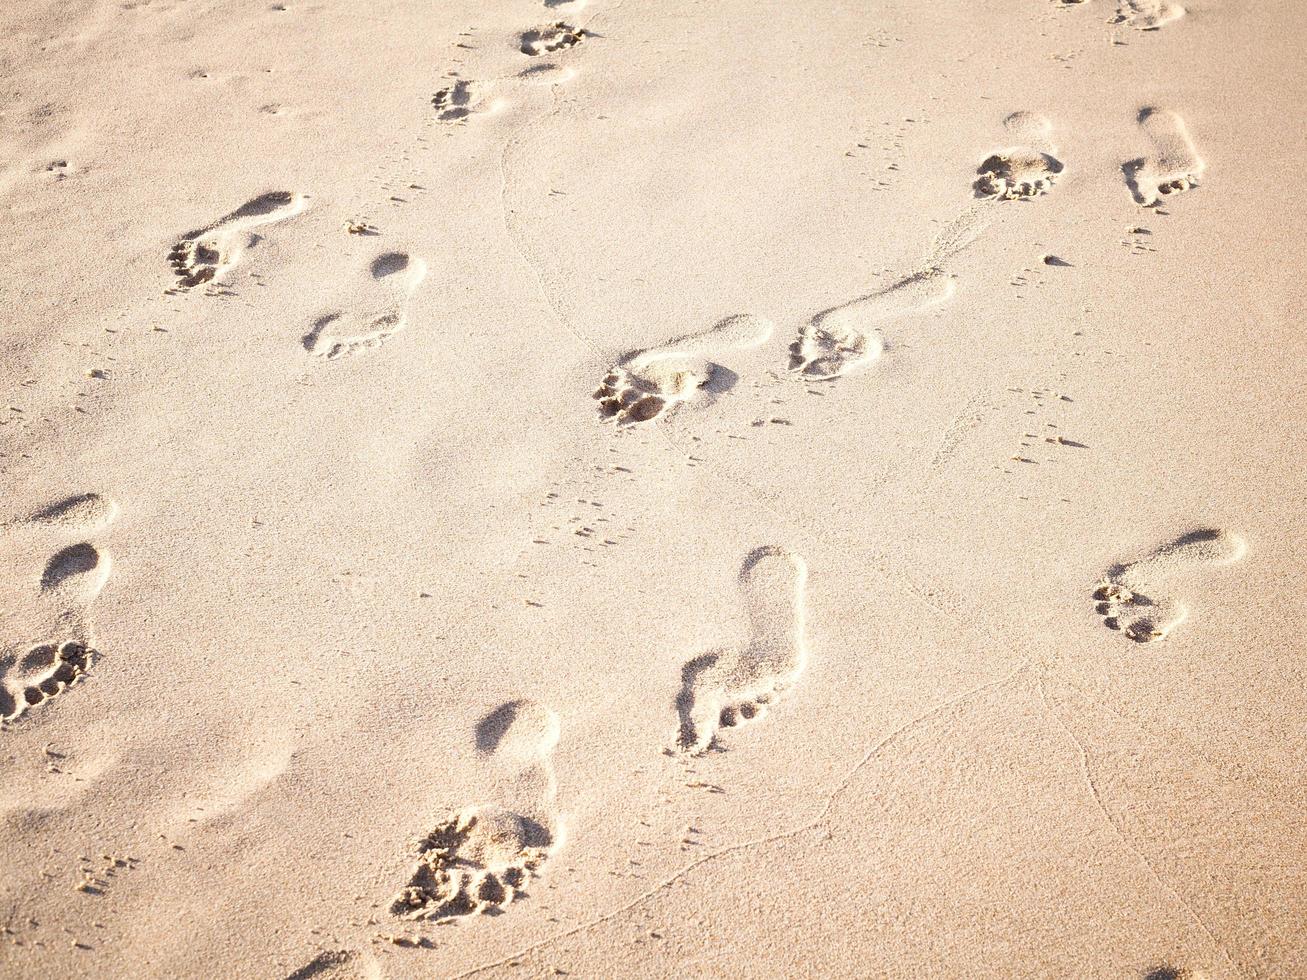 Fußspuren im Sand am Strand foto